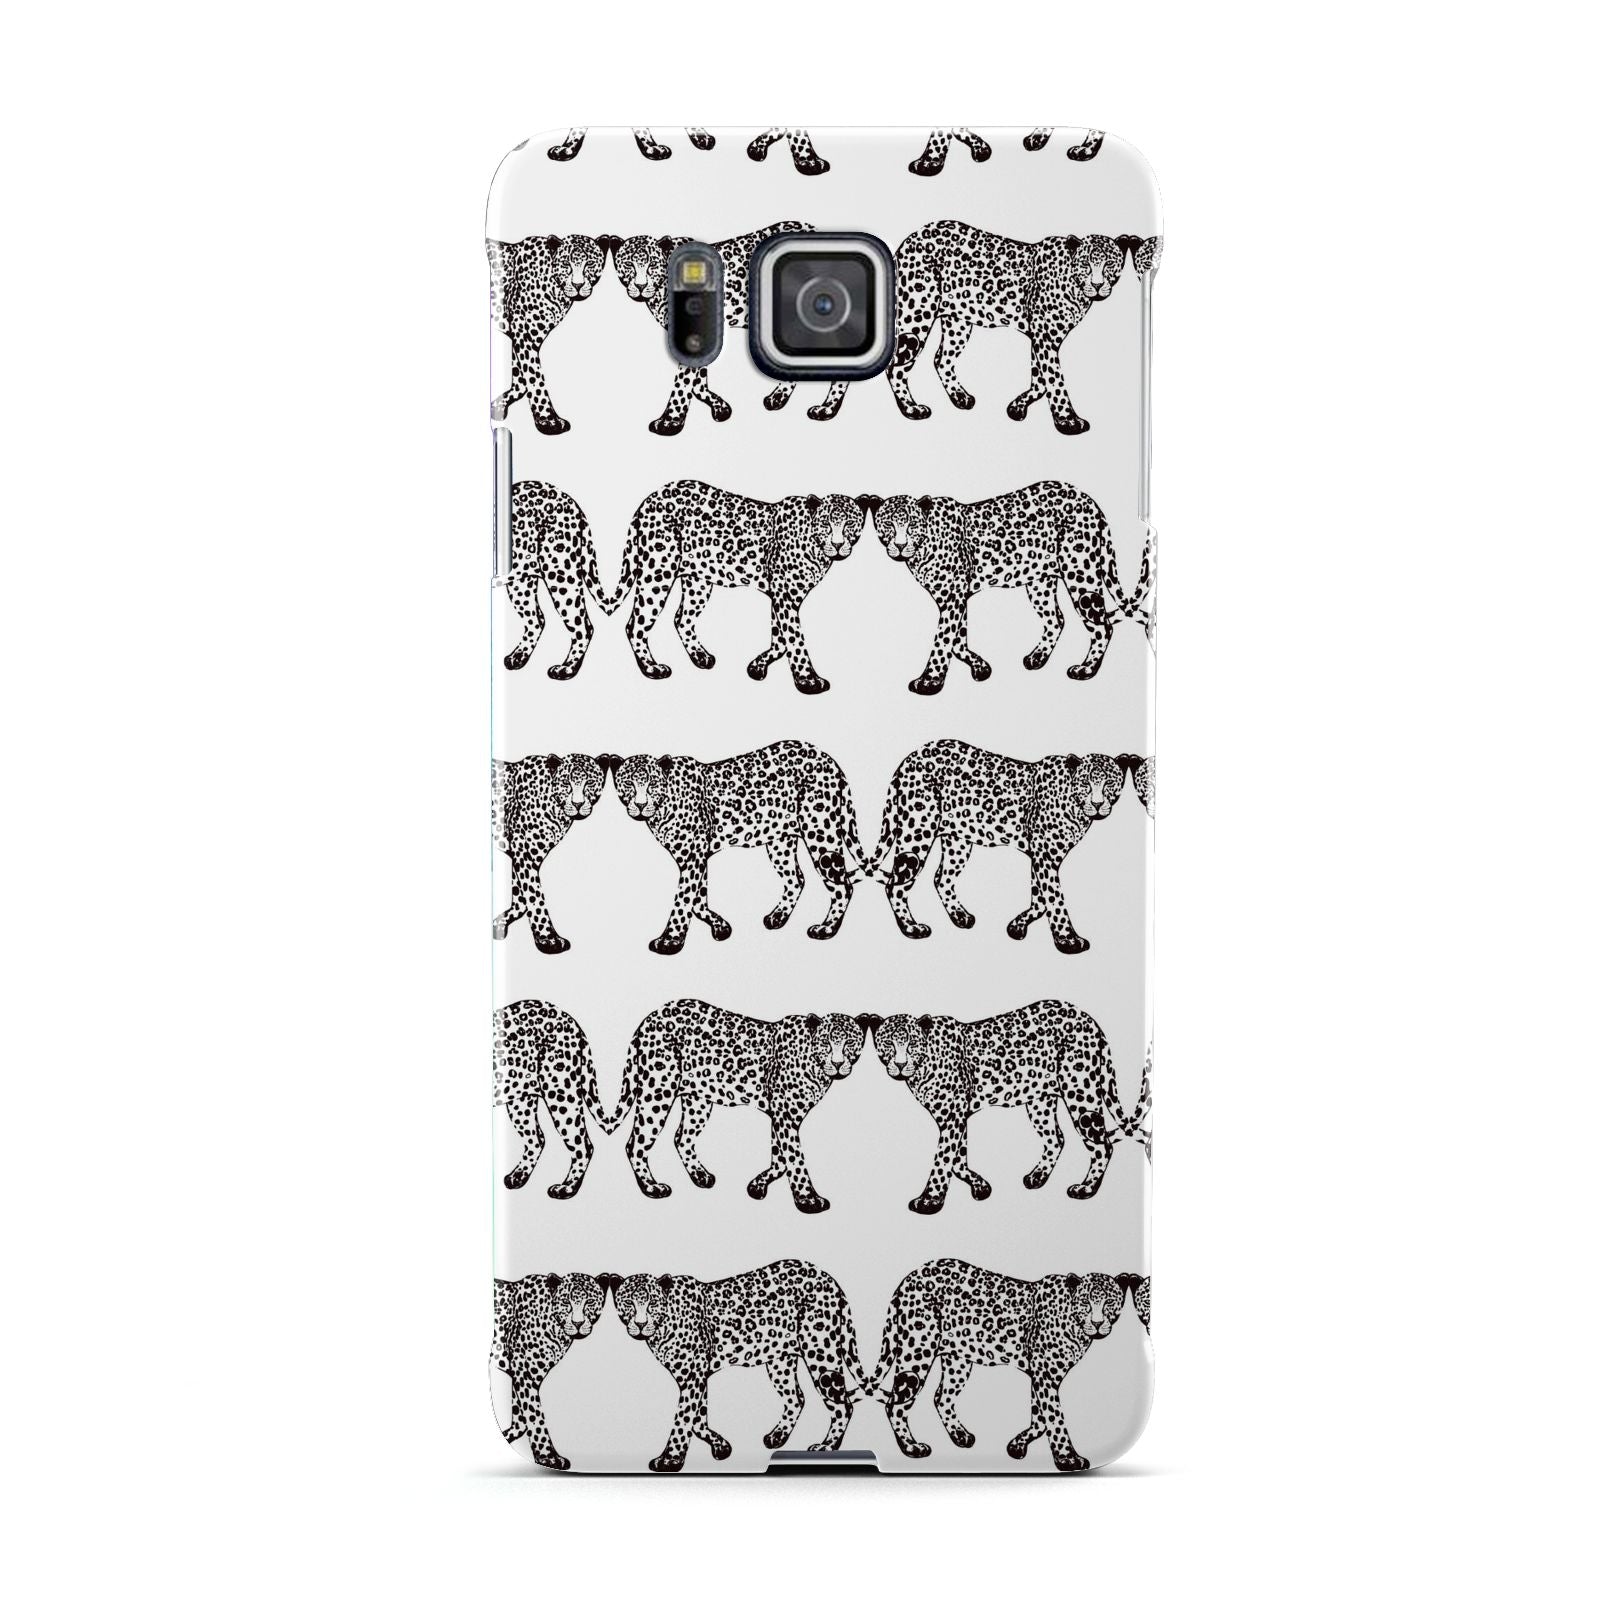 Monochrome Mirrored Leopard Print Samsung Galaxy Alpha Case